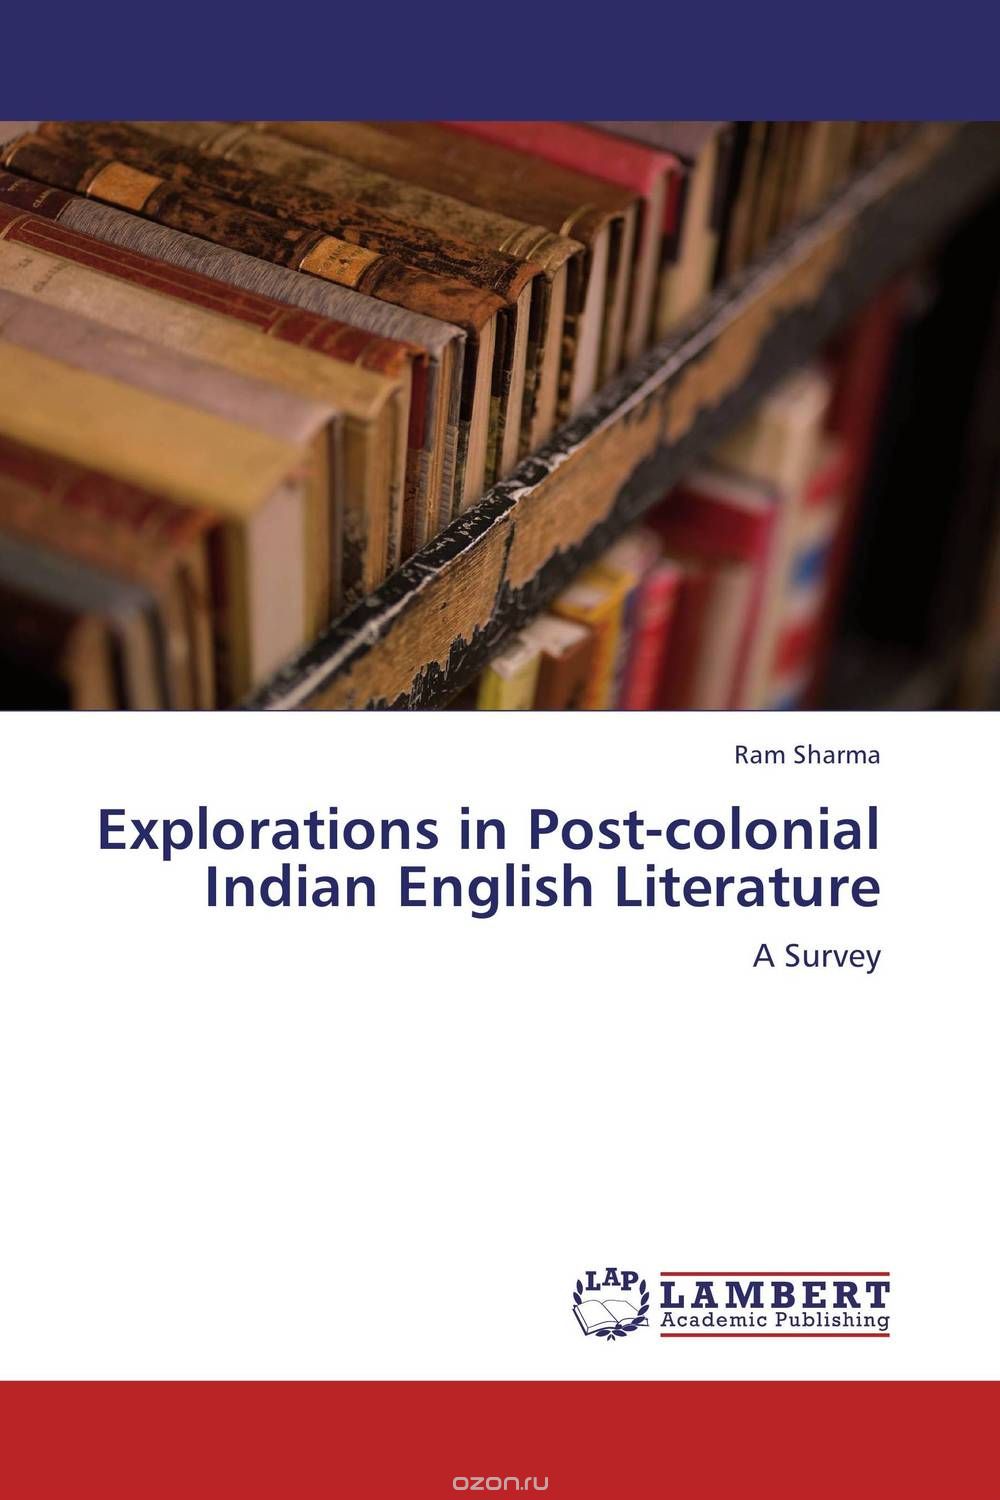 Скачать книгу "Explorations in Post-colonial Indian English Literature"